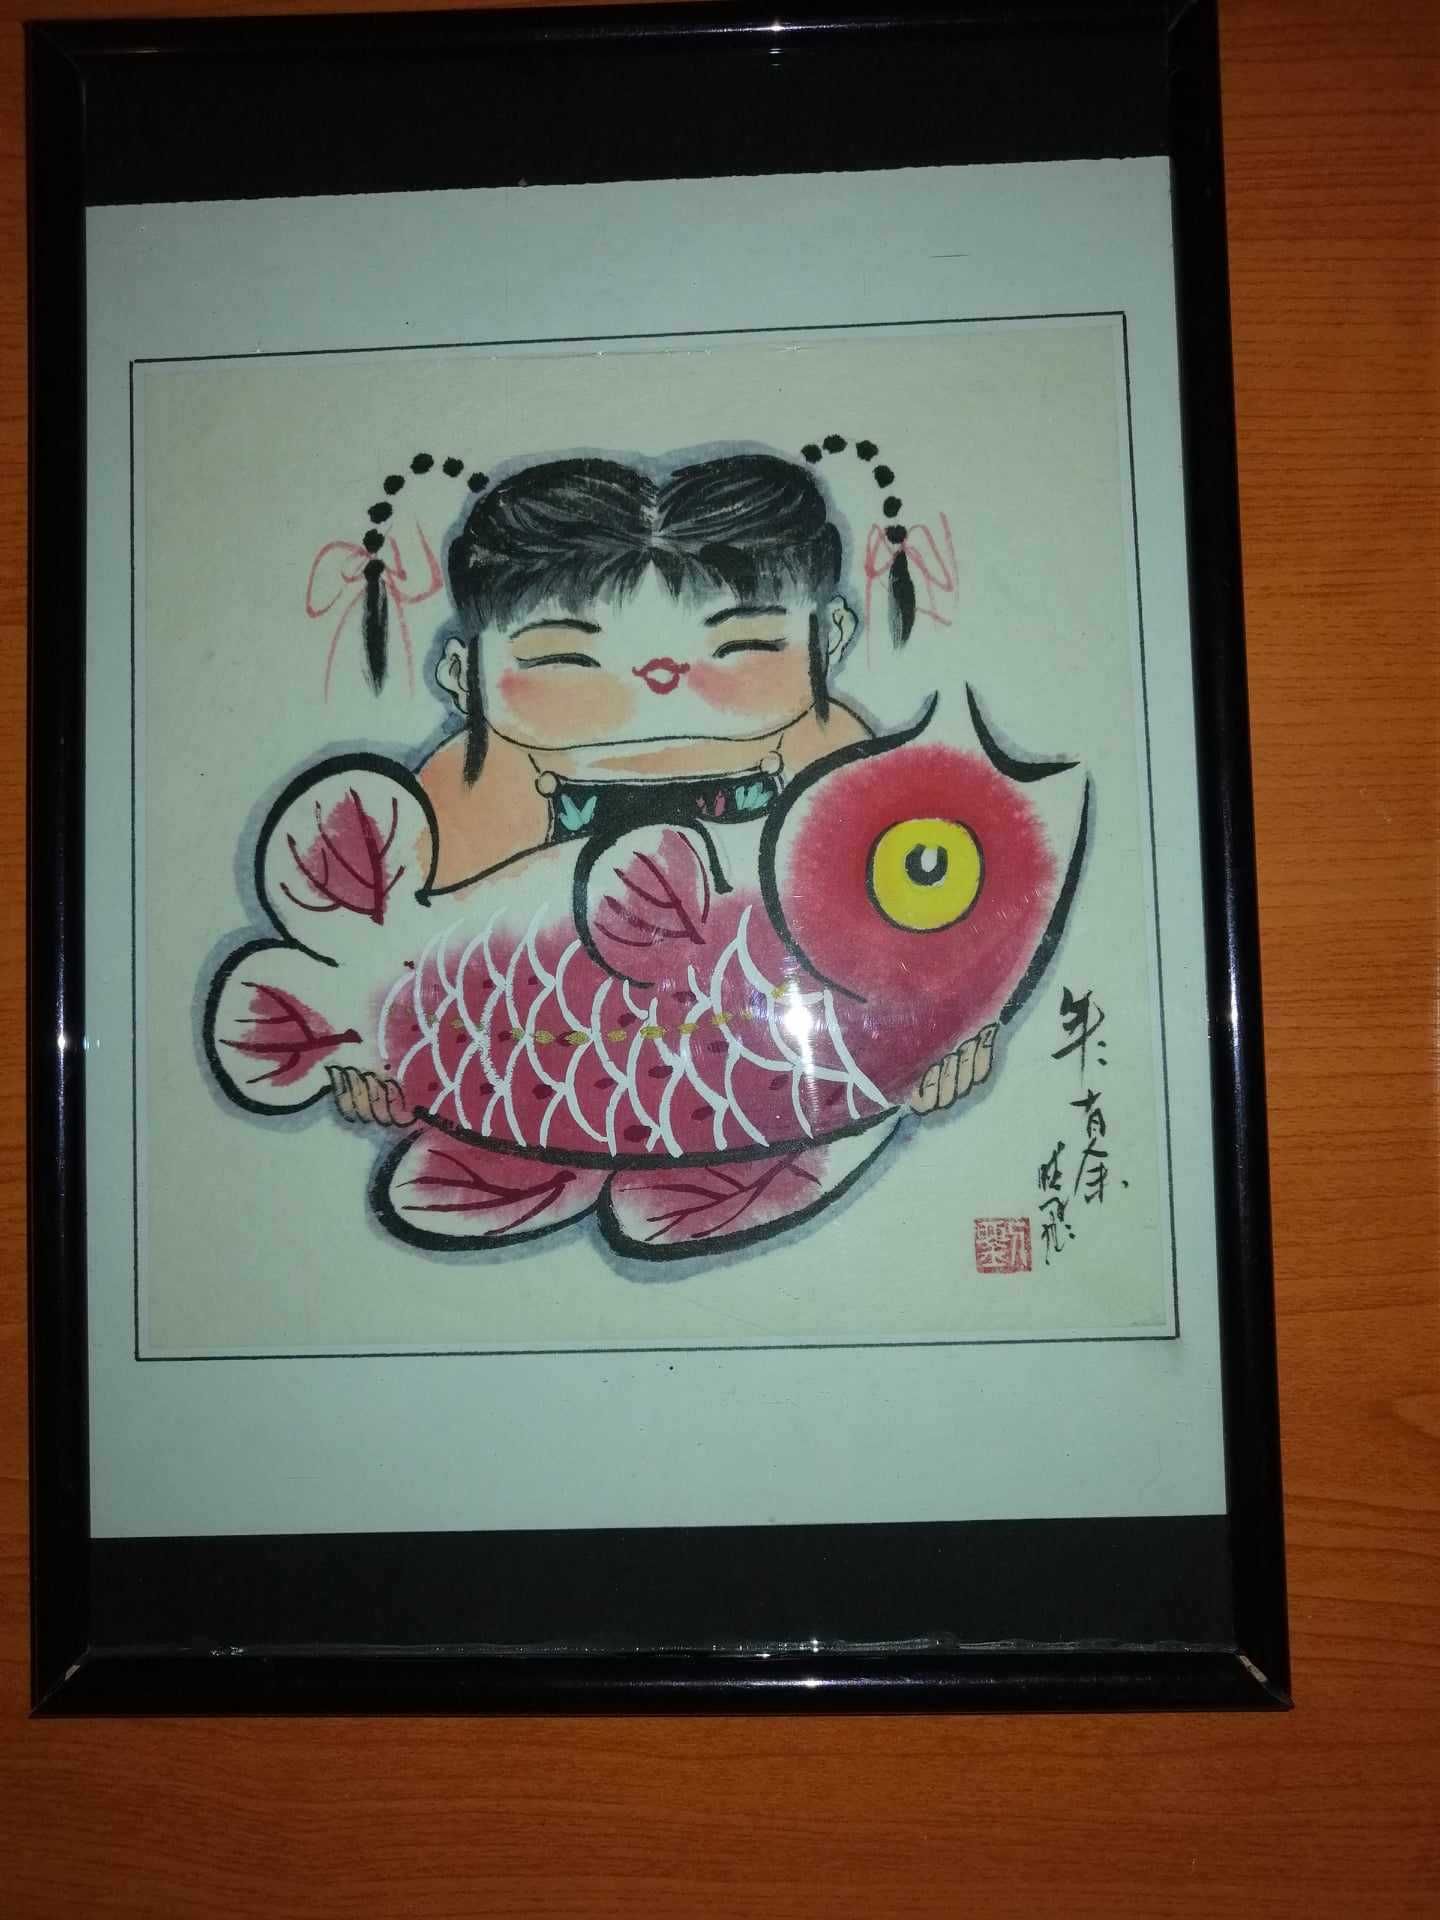 Pereche tablou pictura chineza ilustratie printata fata baiat peste